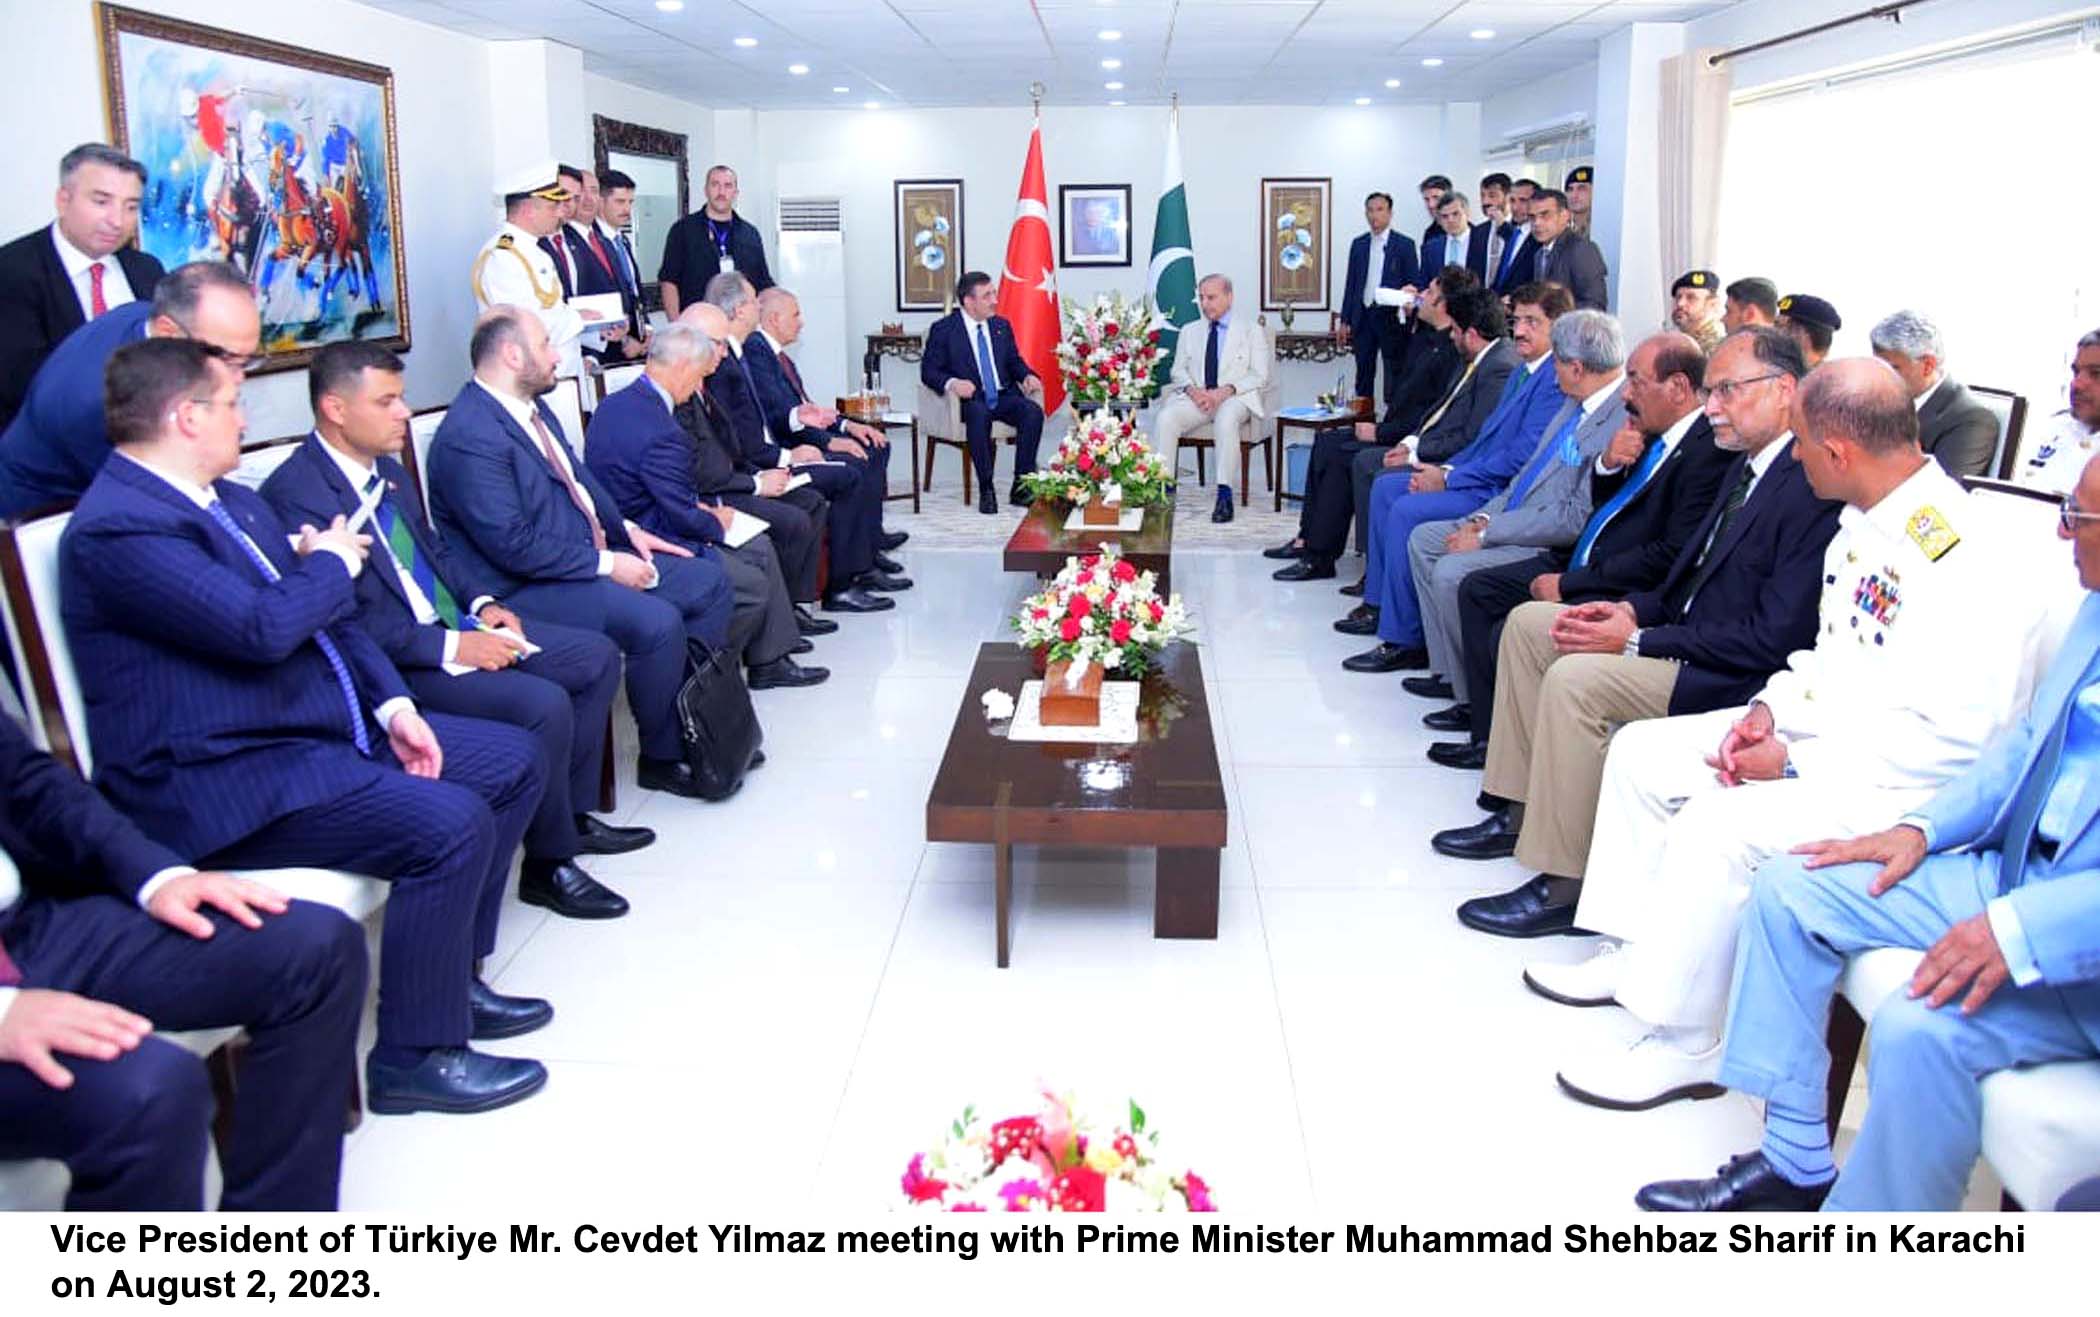 PM Shehbaz Sharif urges Turkiye to join CPEC